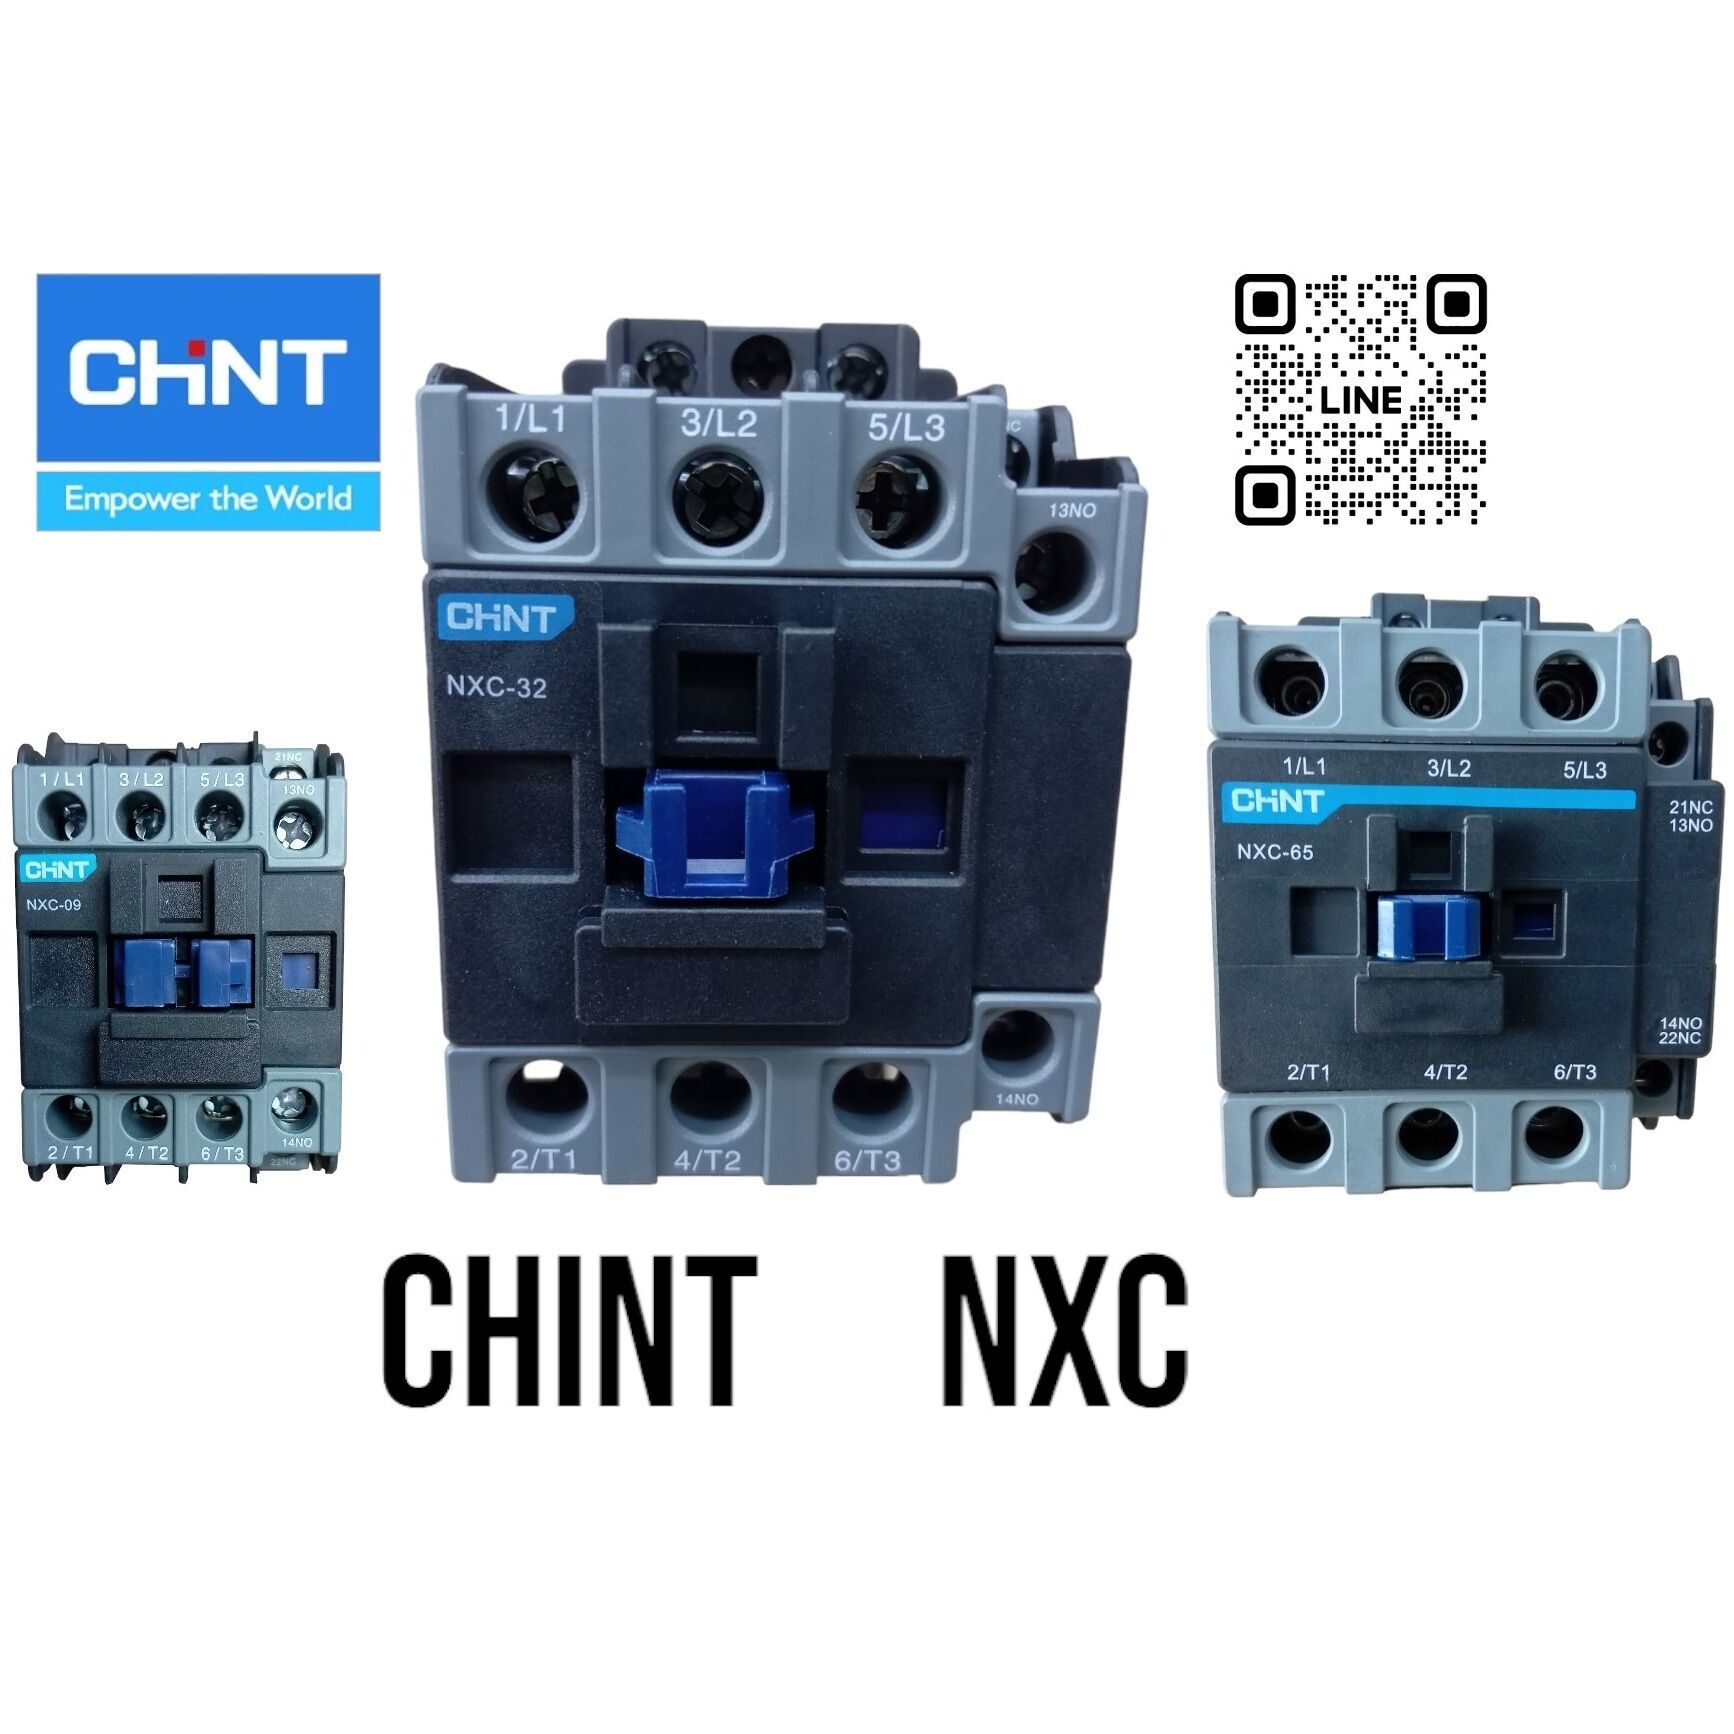 CHINT THAILAND
CHIN ELECTRIC
NXC NXR